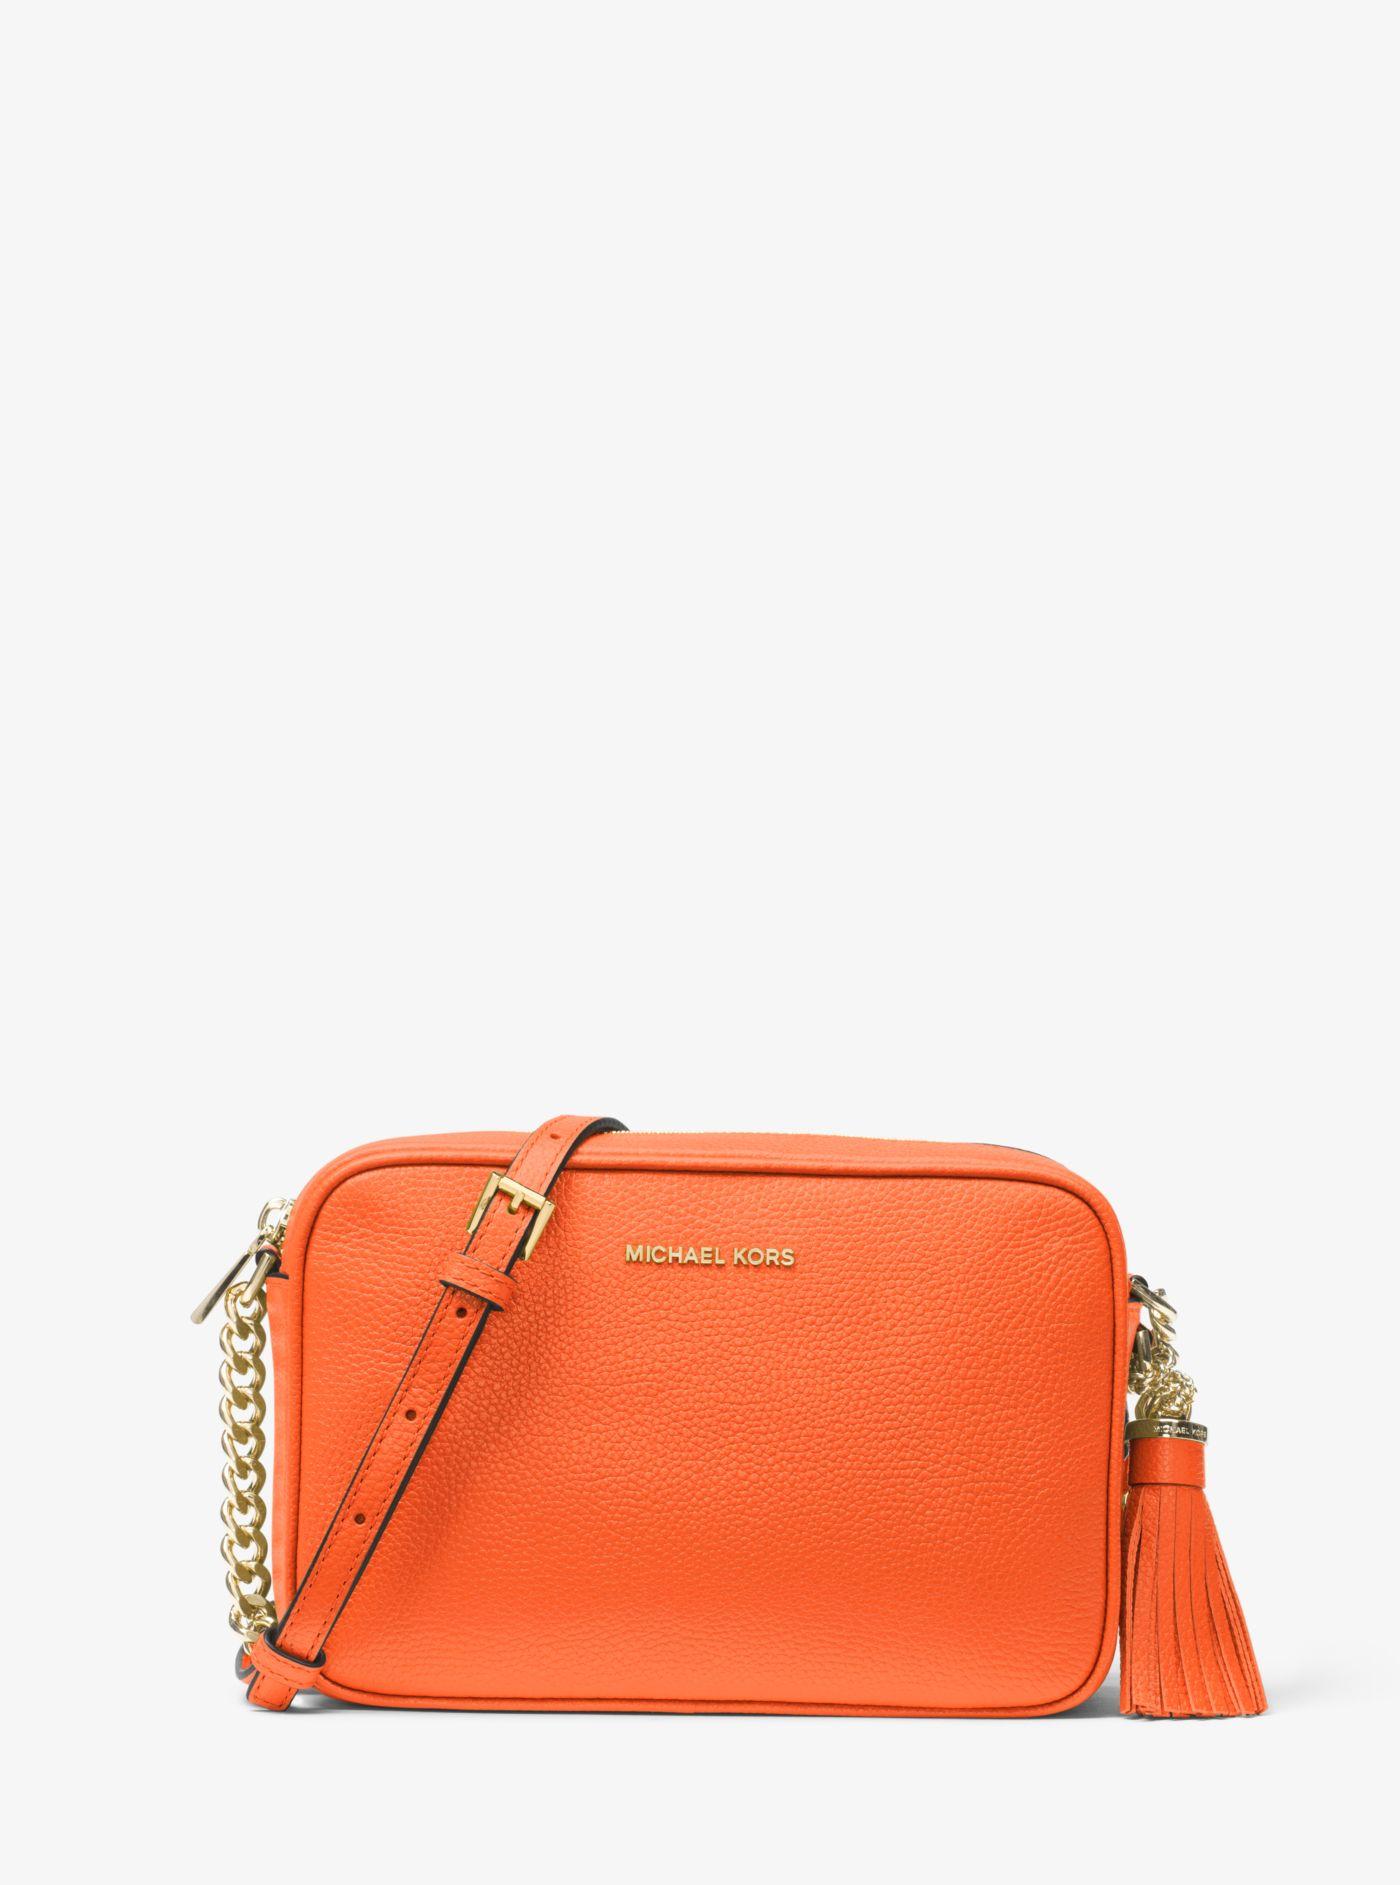 Michael Kors Ginny Leather Crossbody Bag in Clementine (Orange) | Lyst